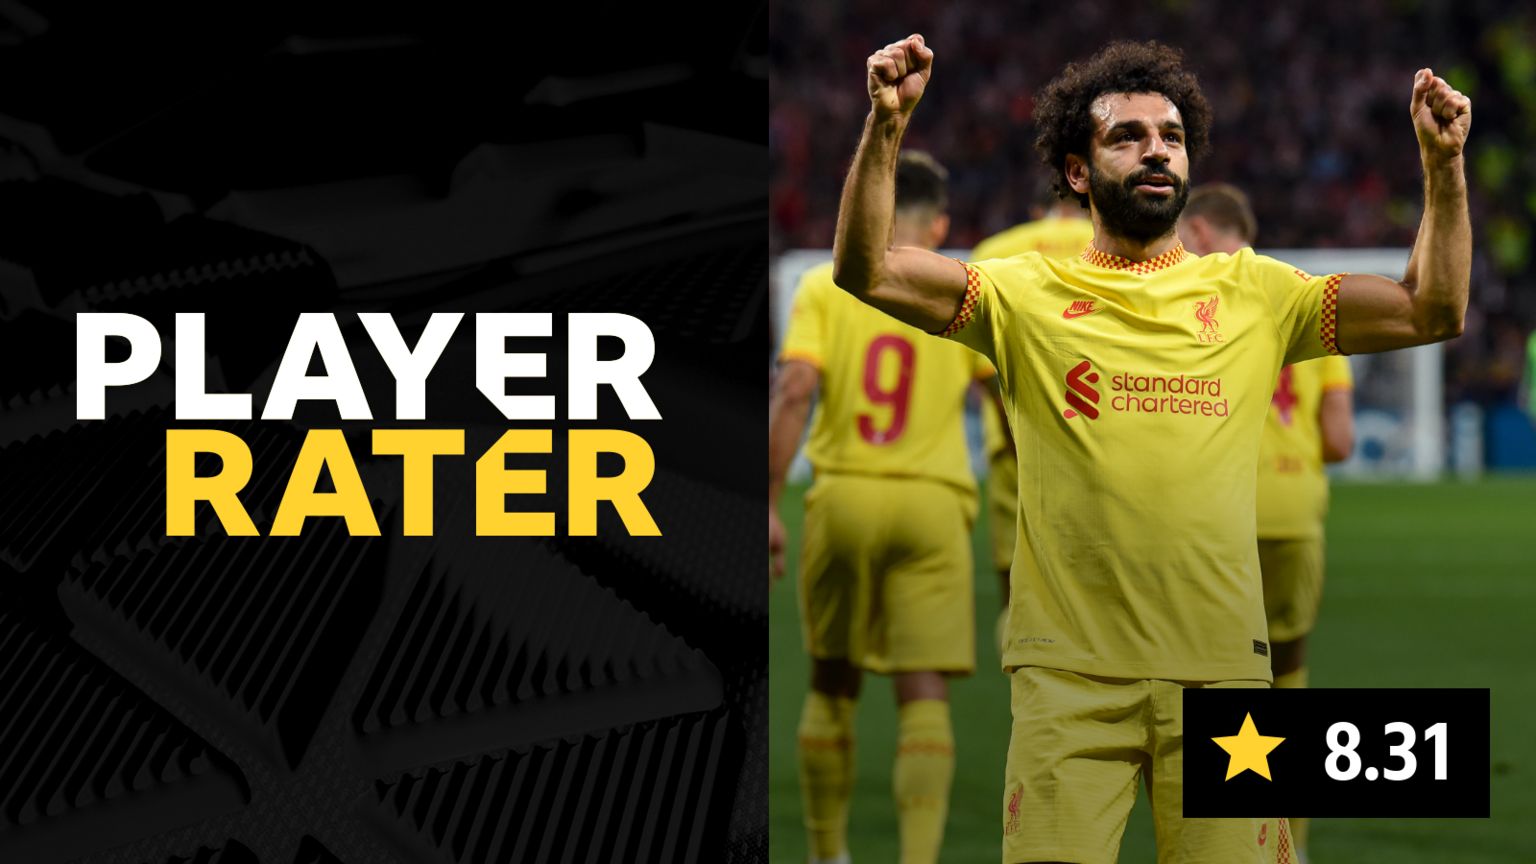 Player Rater - Mohamed Salah scored 8.31 for Liverpool against Atletico Madrid